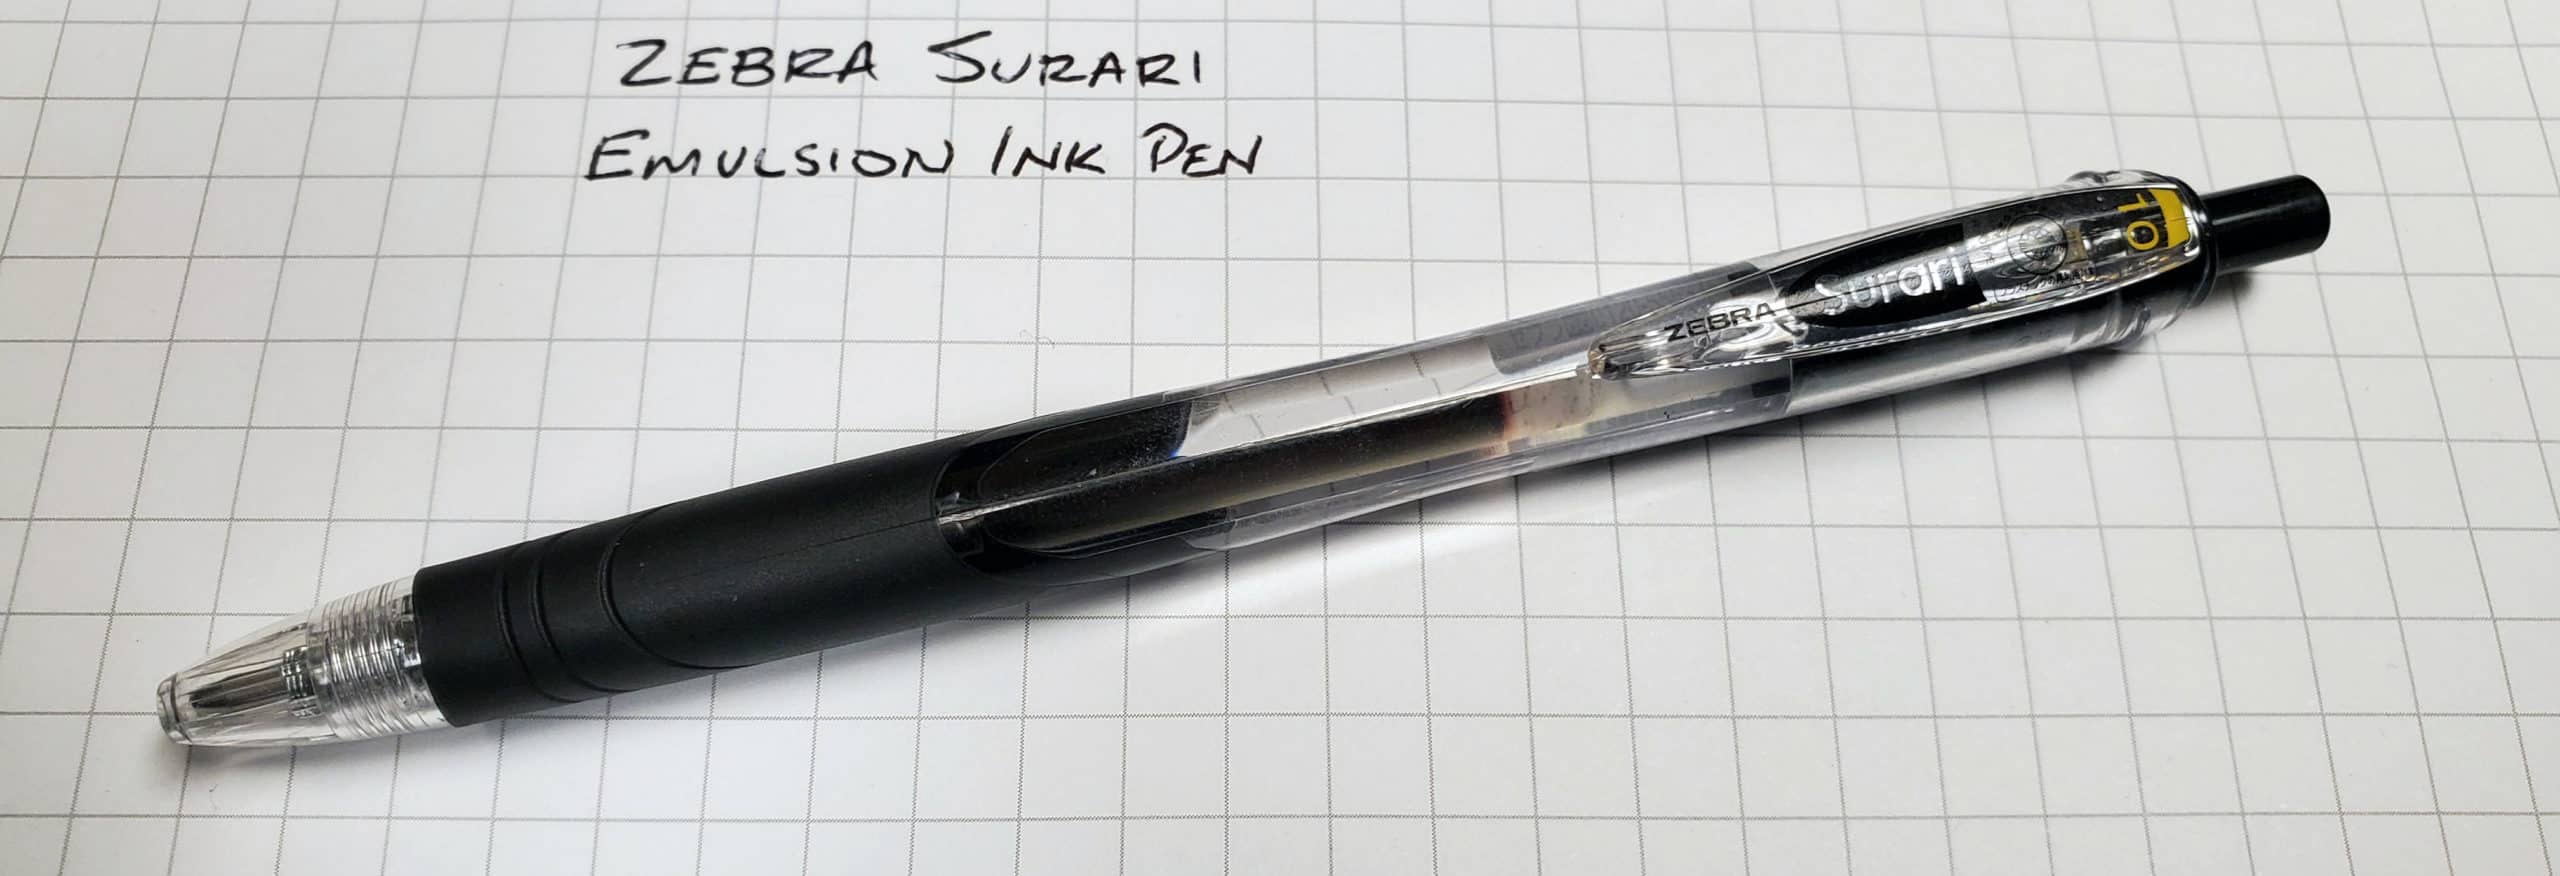 Zebra Surari Emulsion Ink Pen